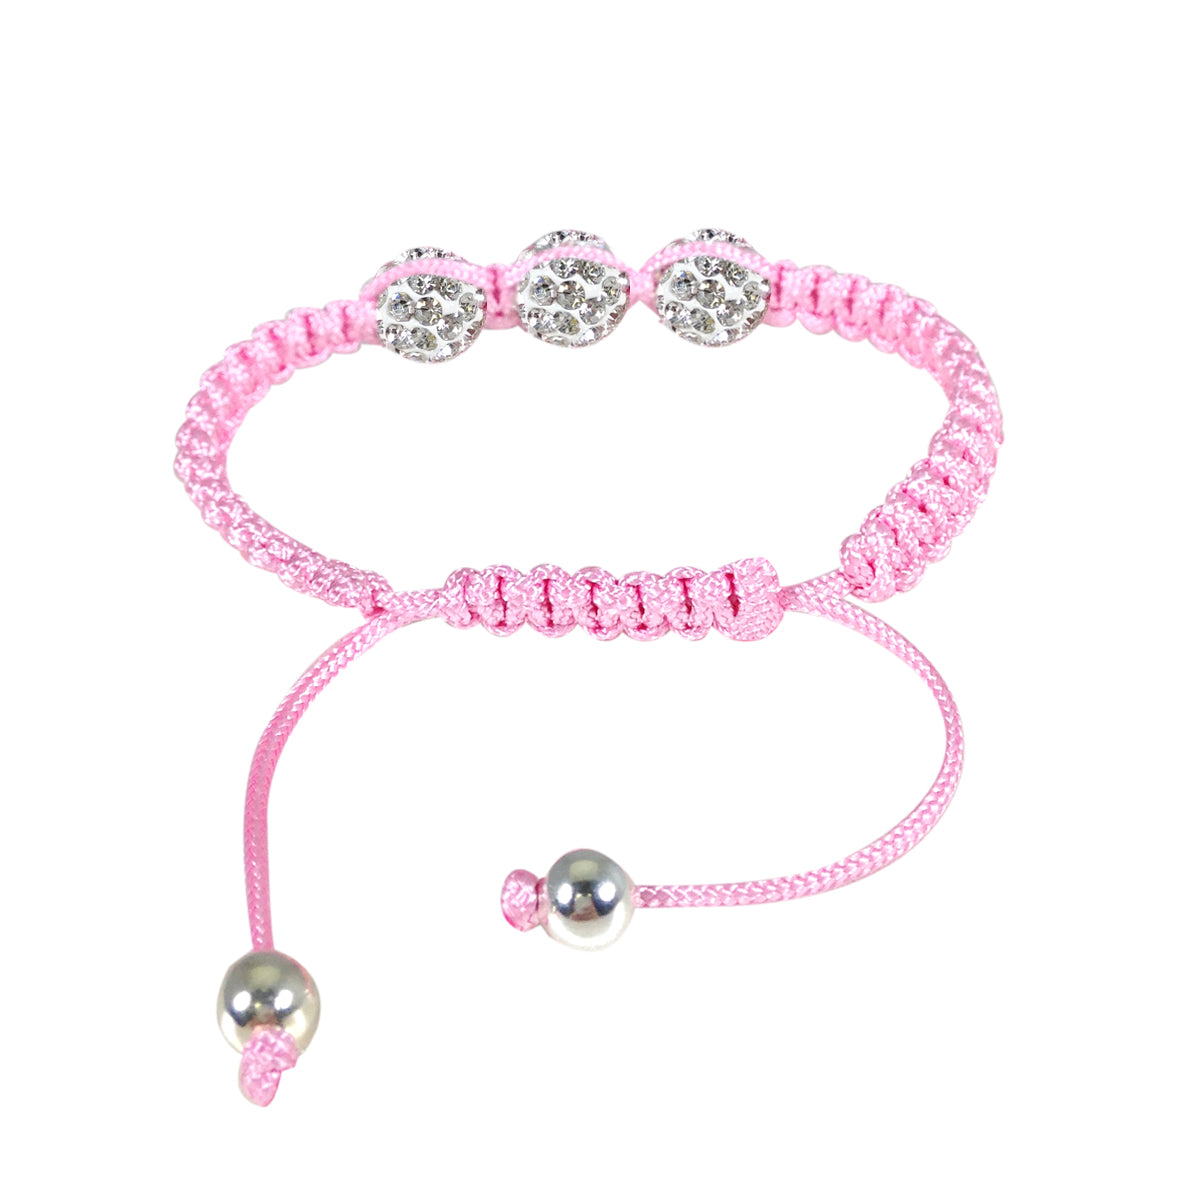 Children's Crystal Beaded Cord Bracelet, Pink